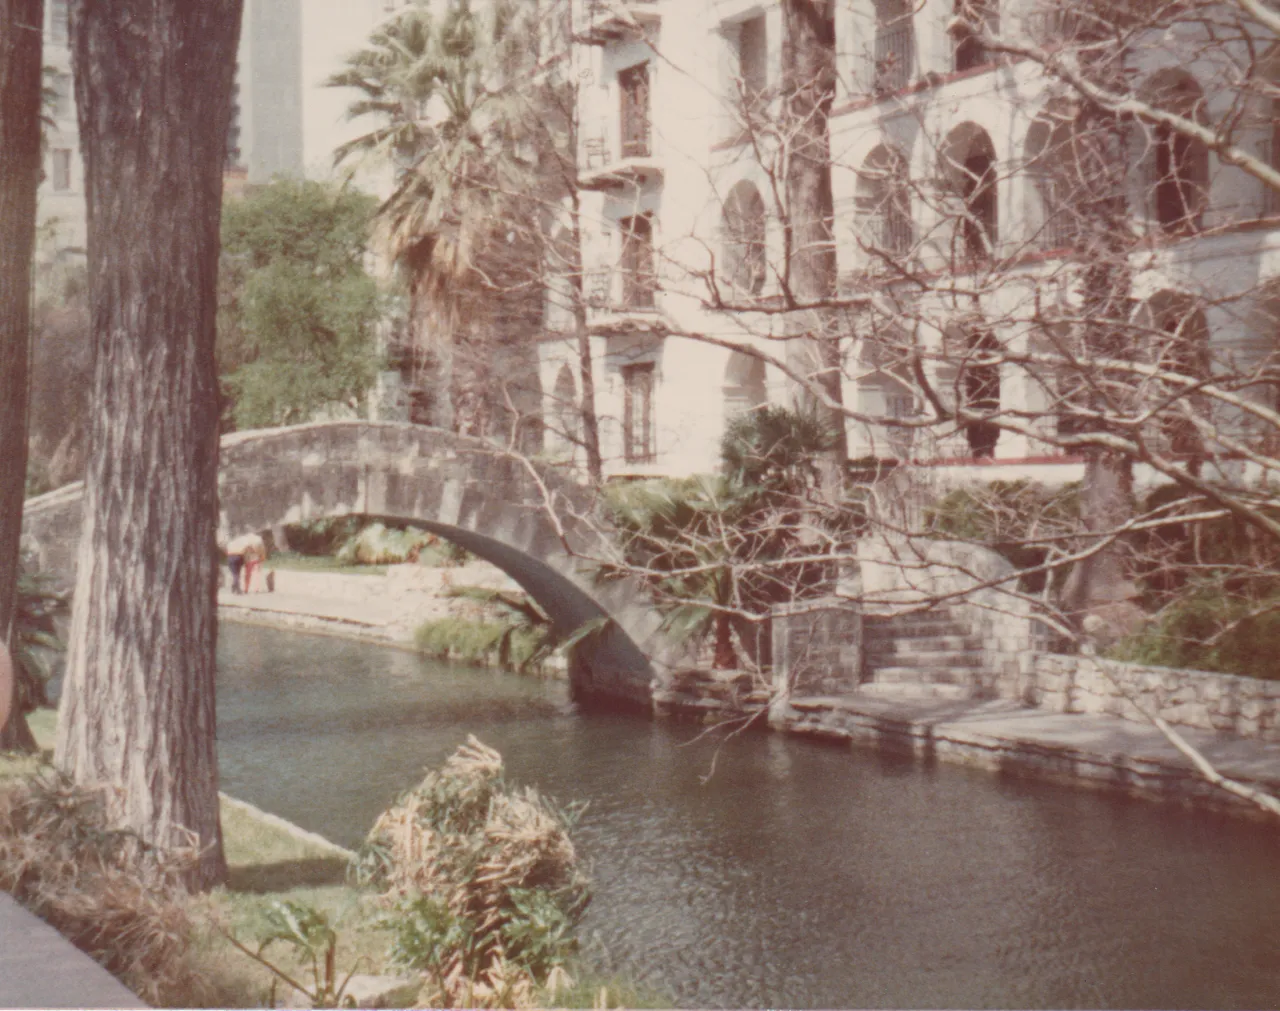 1975-03-26 - Wednesday - San Antonio, no dates on these pic-07 - Bridge, mote, trees, building, 11pics.png